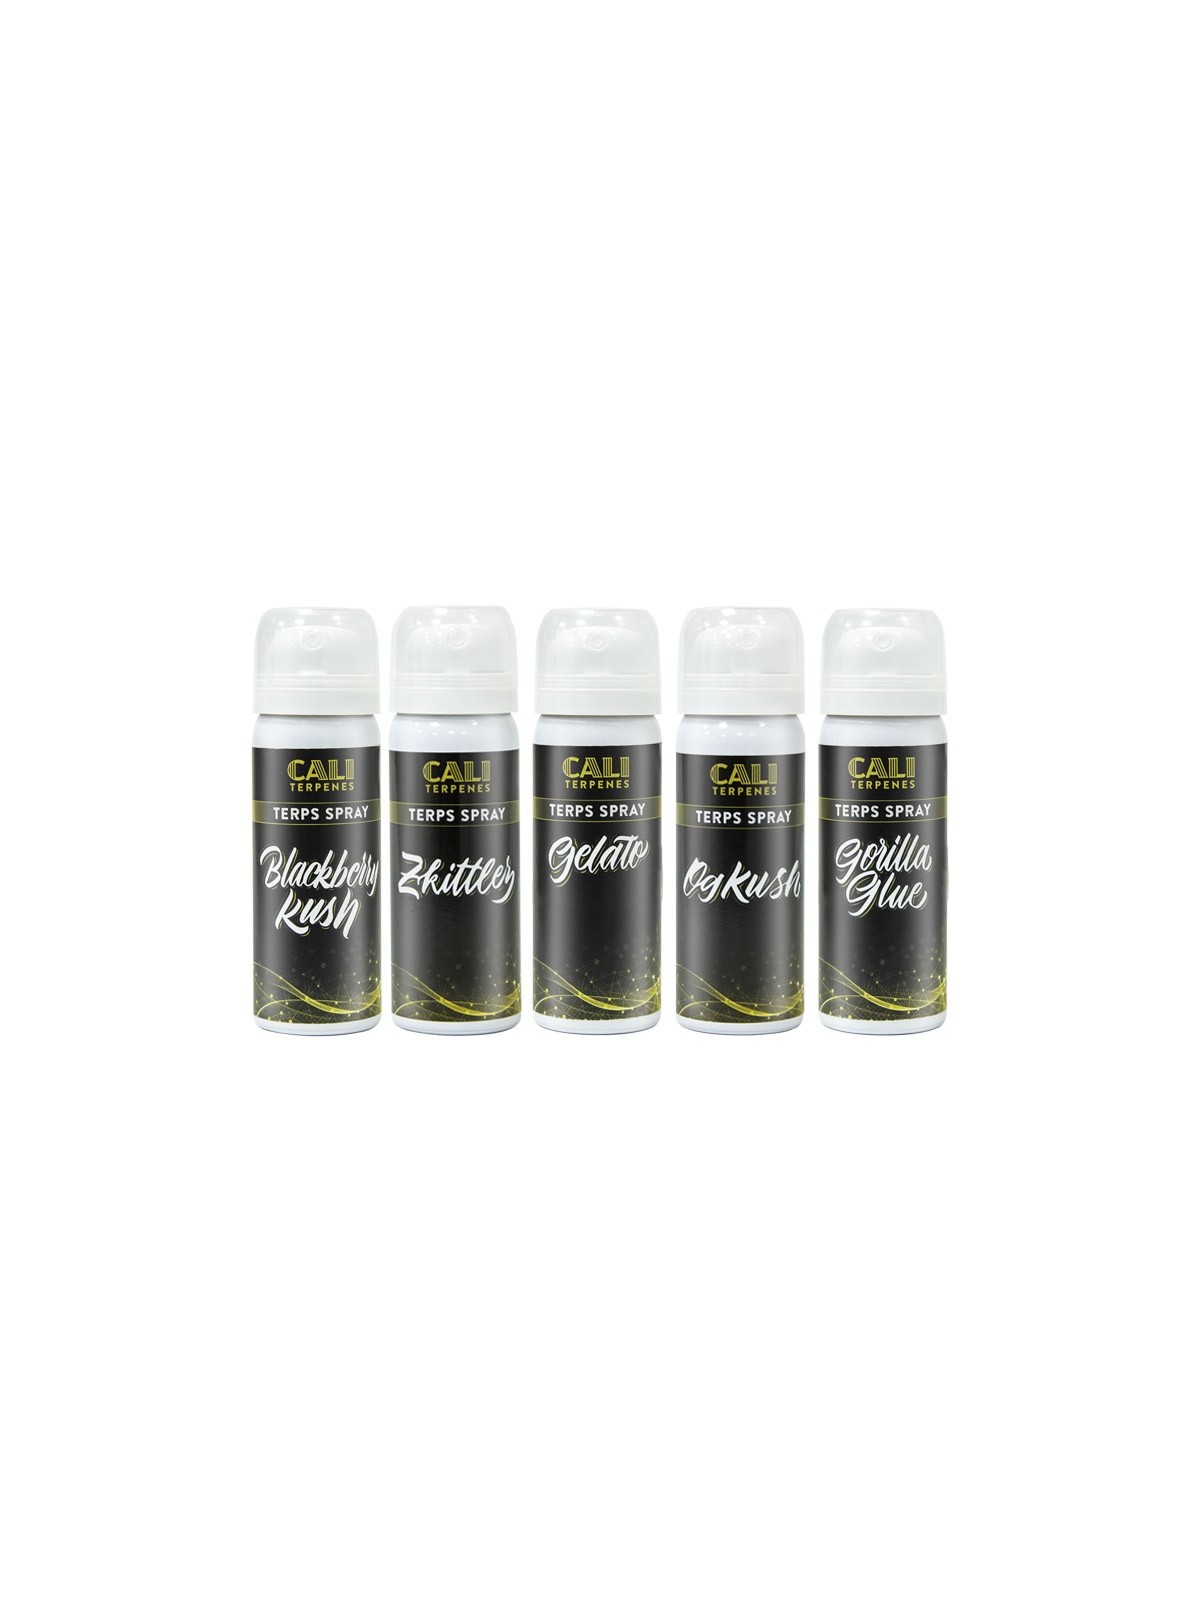 Pack Terps Spray USA 3  5ml de Cali Terpenes